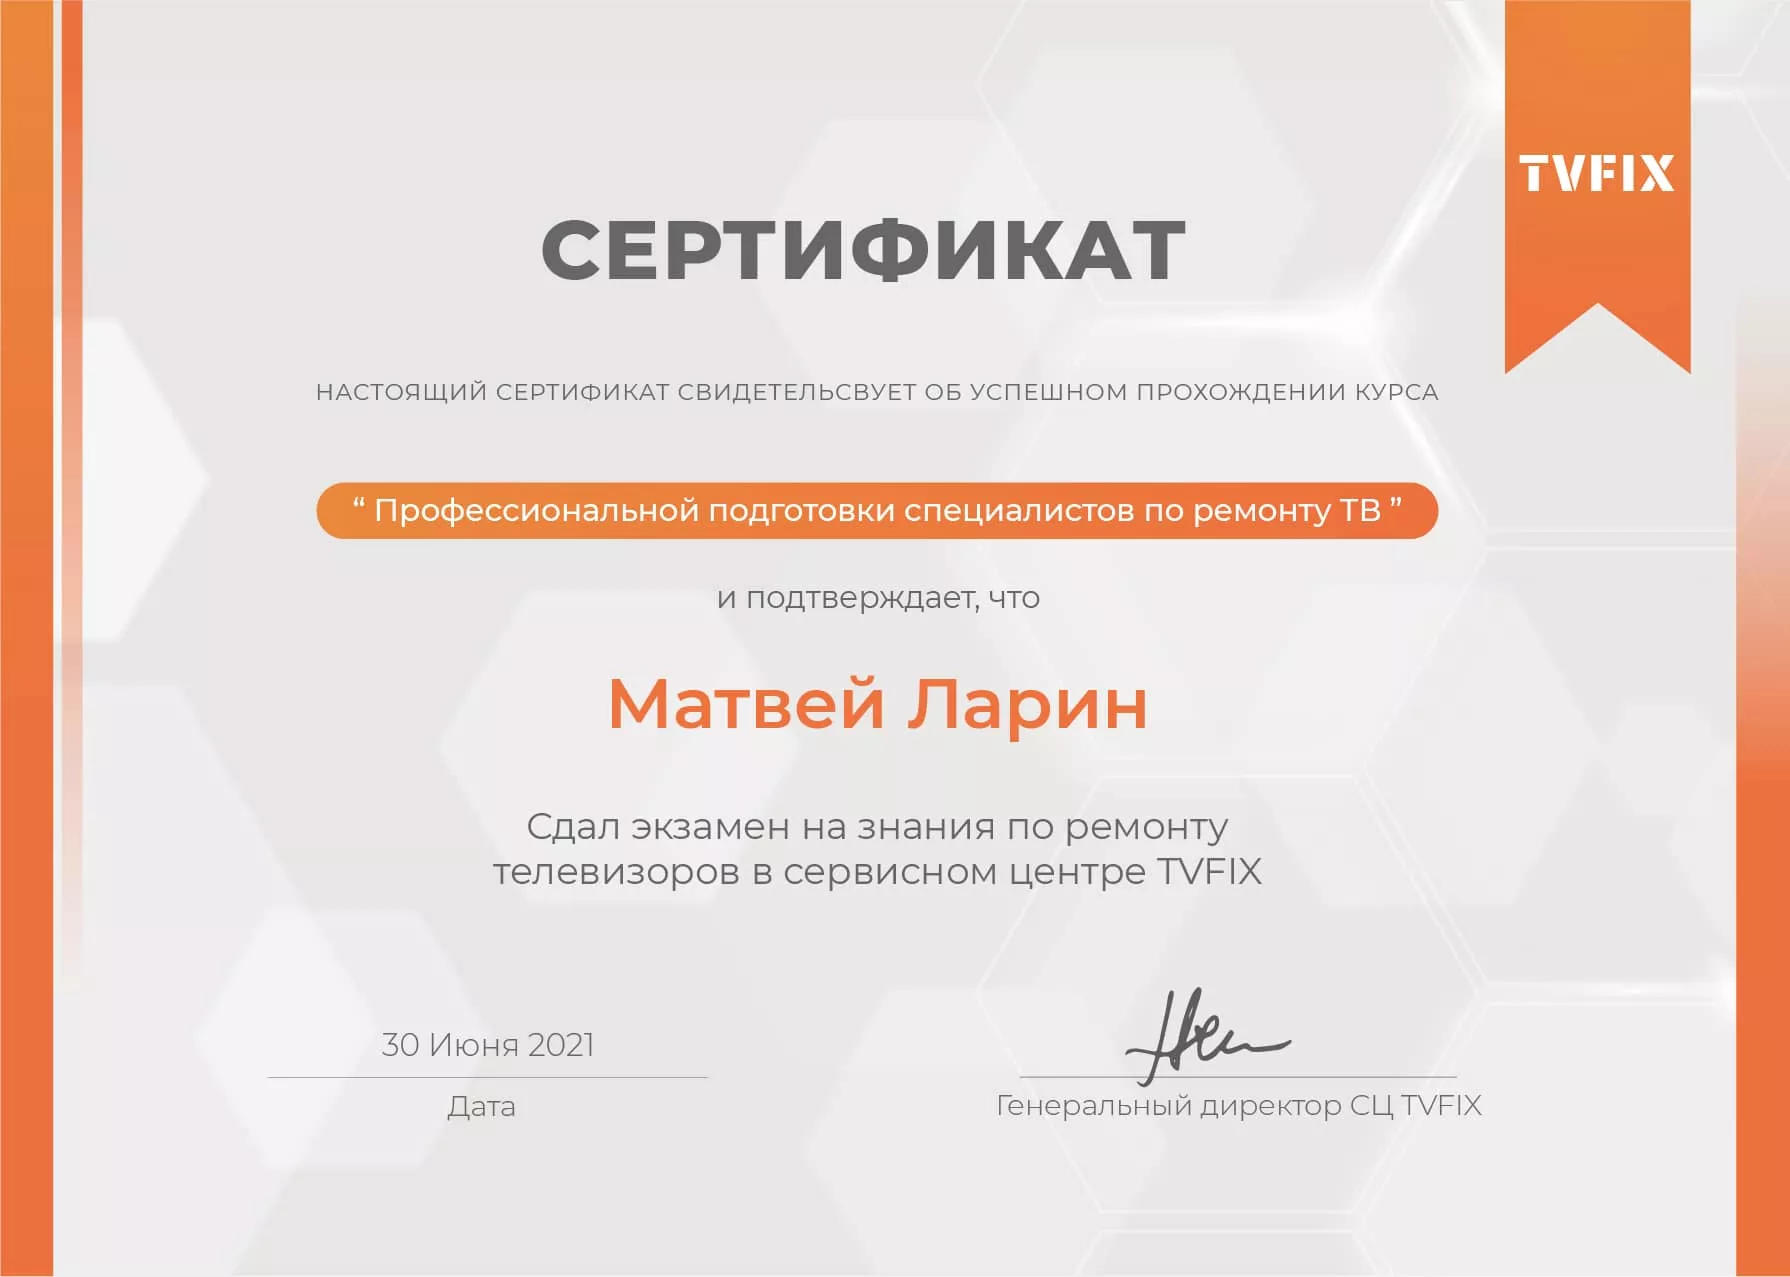 Матвей Ларин сертификат телемастера